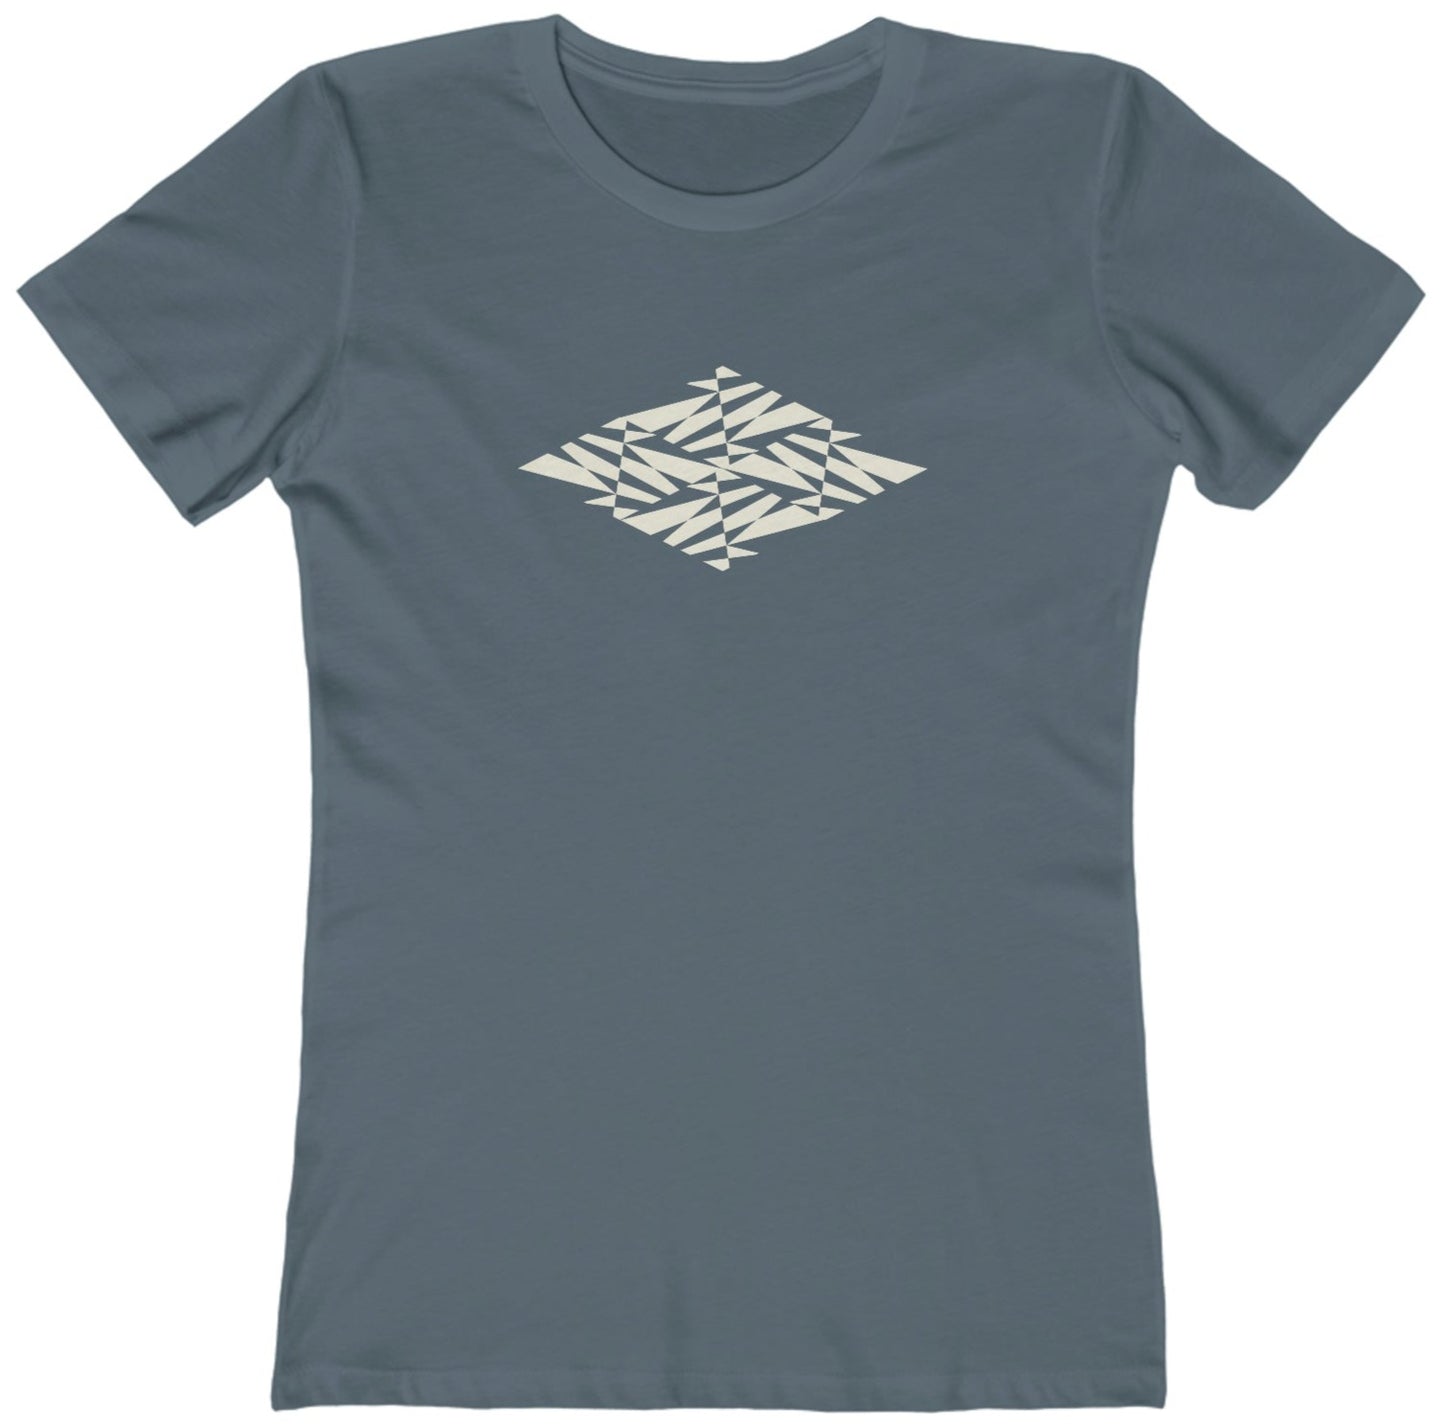 Rough Diamond 2 - Women's T-Shirt